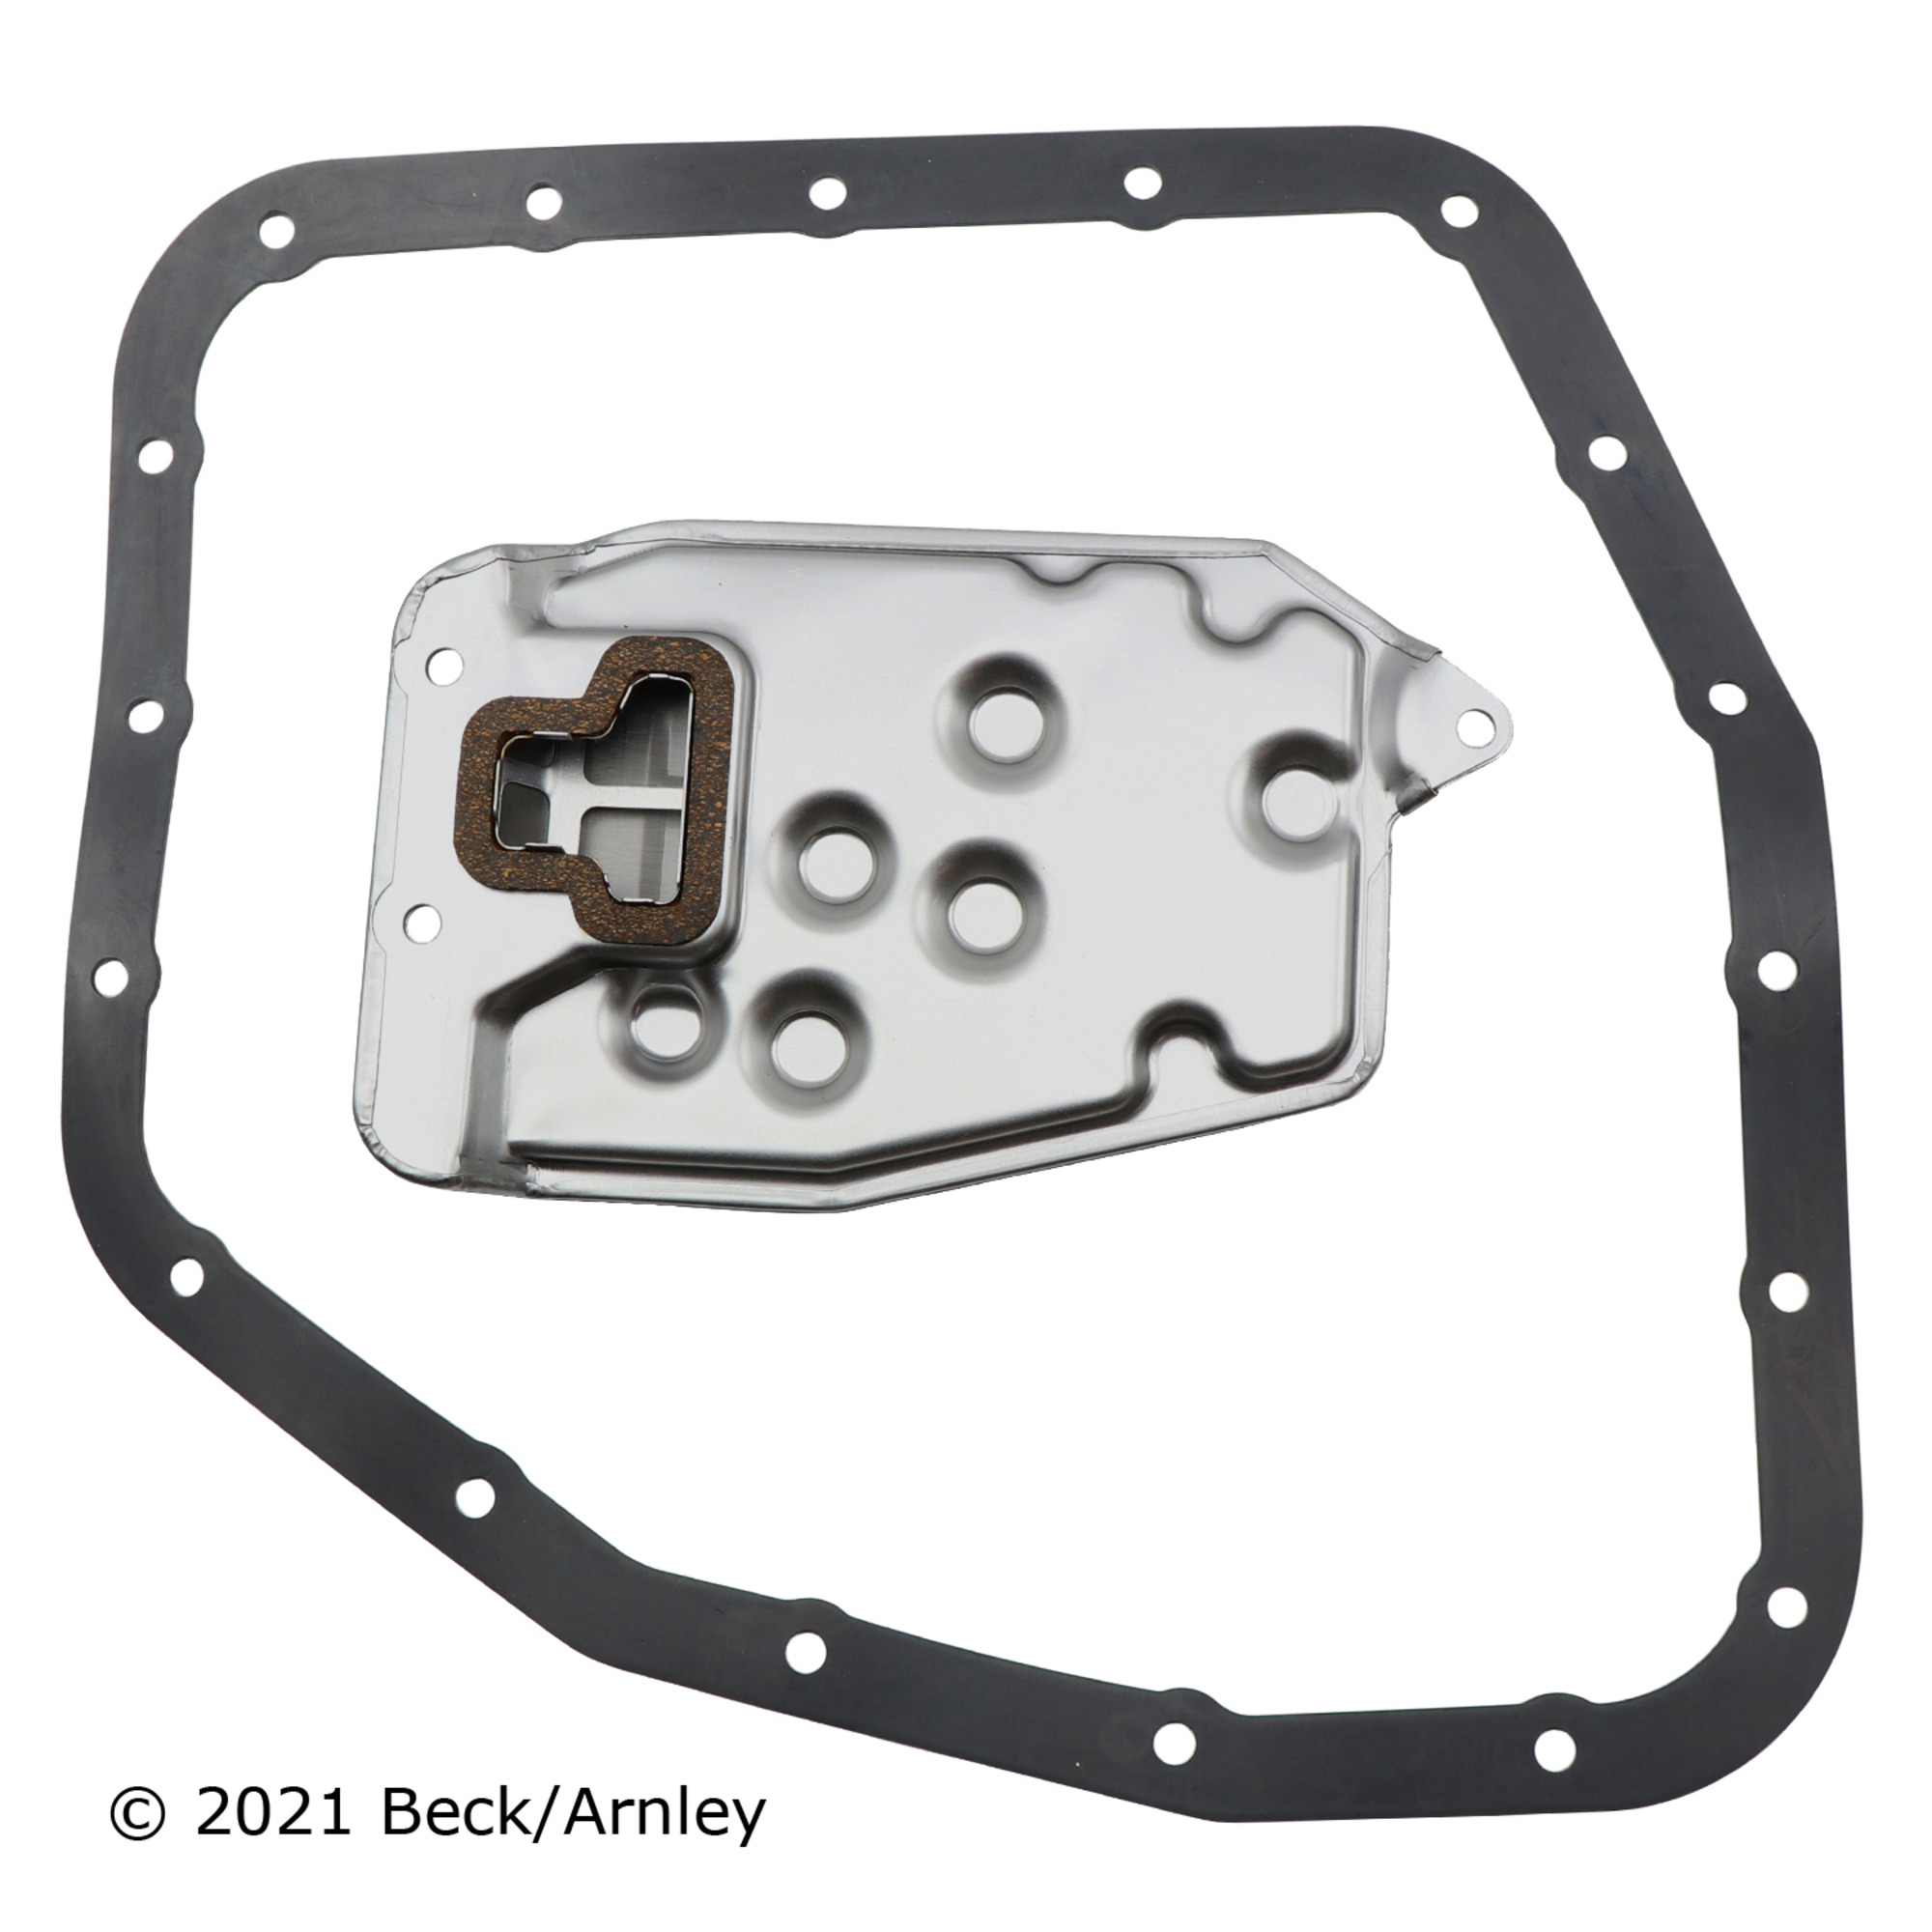 Beck/Arnley 044-0330 Automatic Transmission Filter Kit For: Toyota Corolla 1.8L (2003-2008), Matrix (2004-2008), Pontiac Vibe (2003-2008)